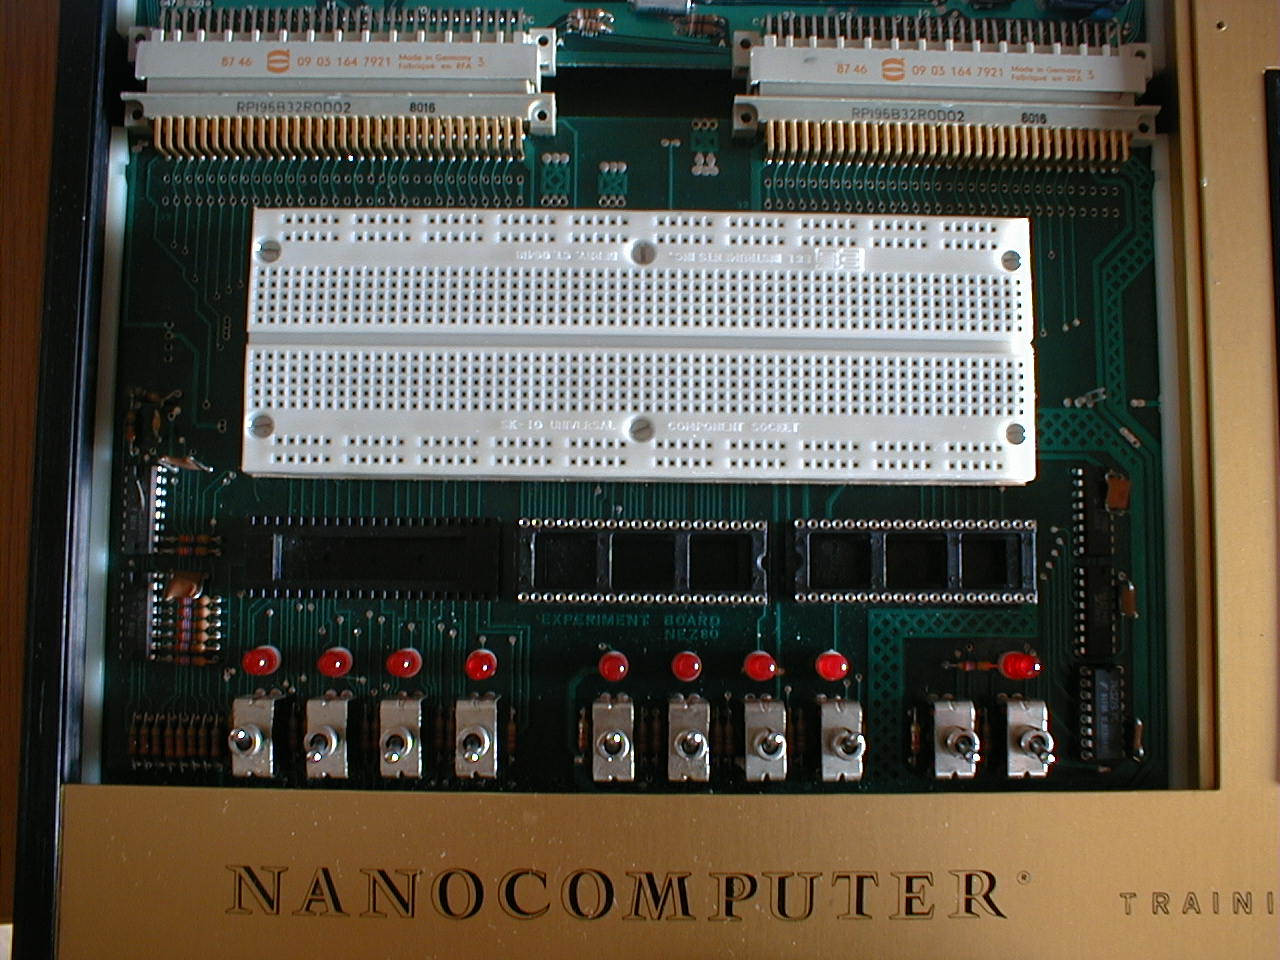 NBZ80S Nanocomputer